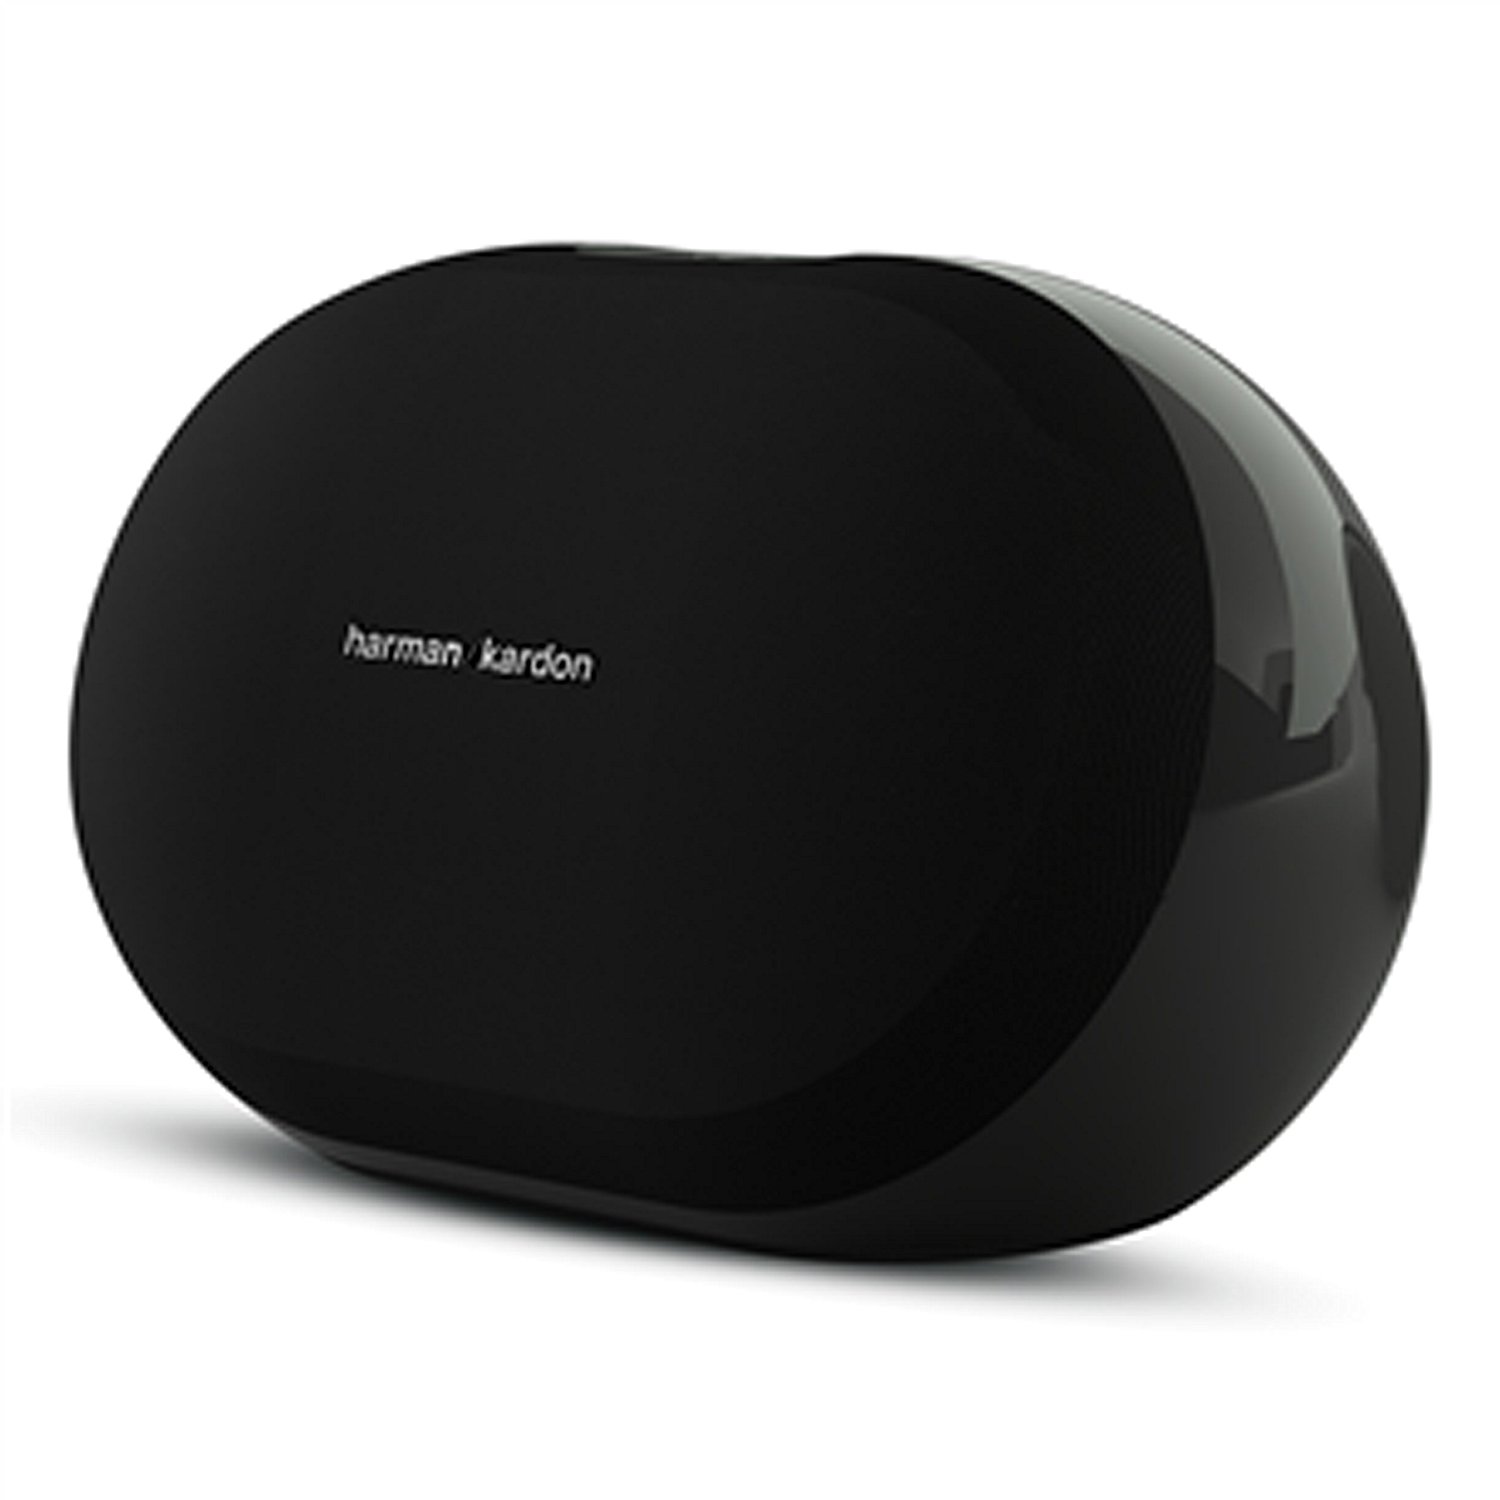 Renewed Black Omni 20 Plus Harman Kardon Wireless HD Wireless Audio System Adapter 